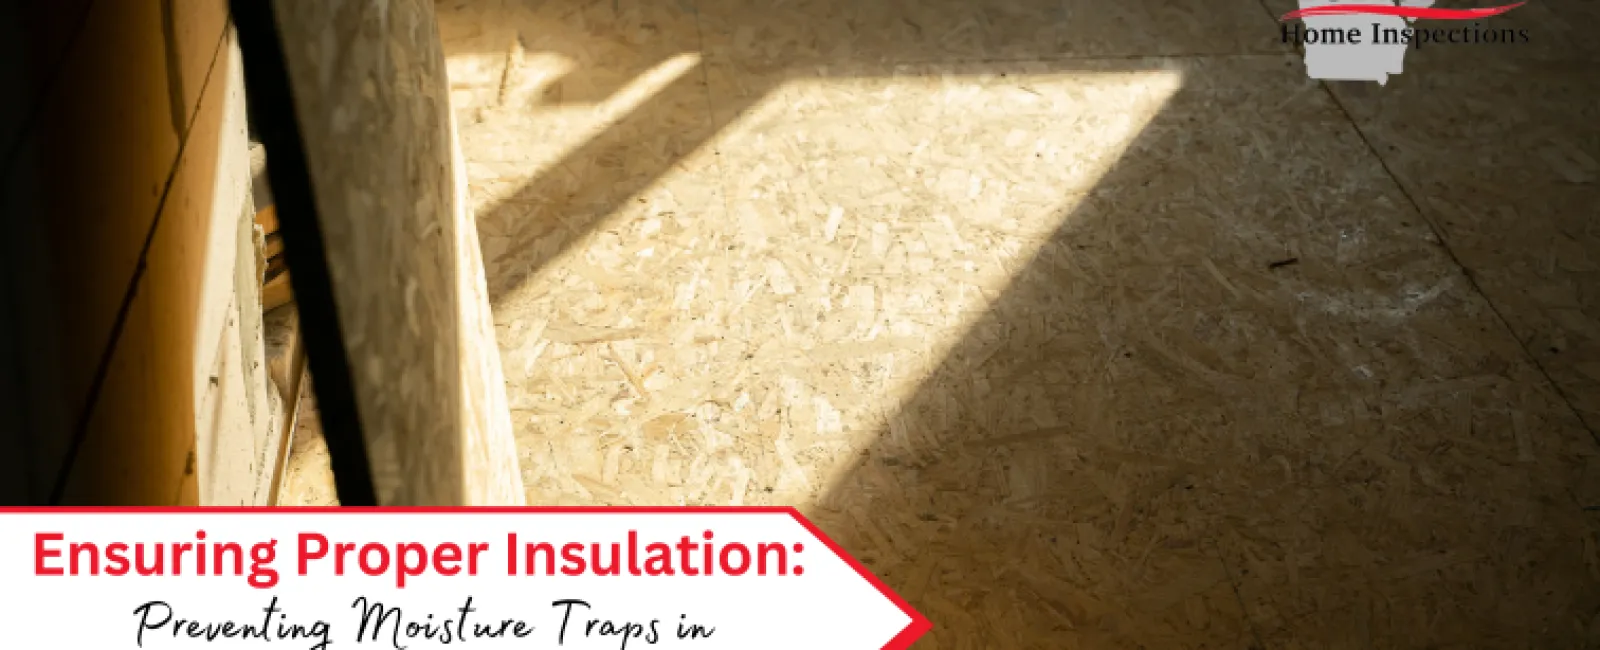 Ensuring Proper Insulation: Preventing Moisture Traps in Crawlspace and Basement Subfloors